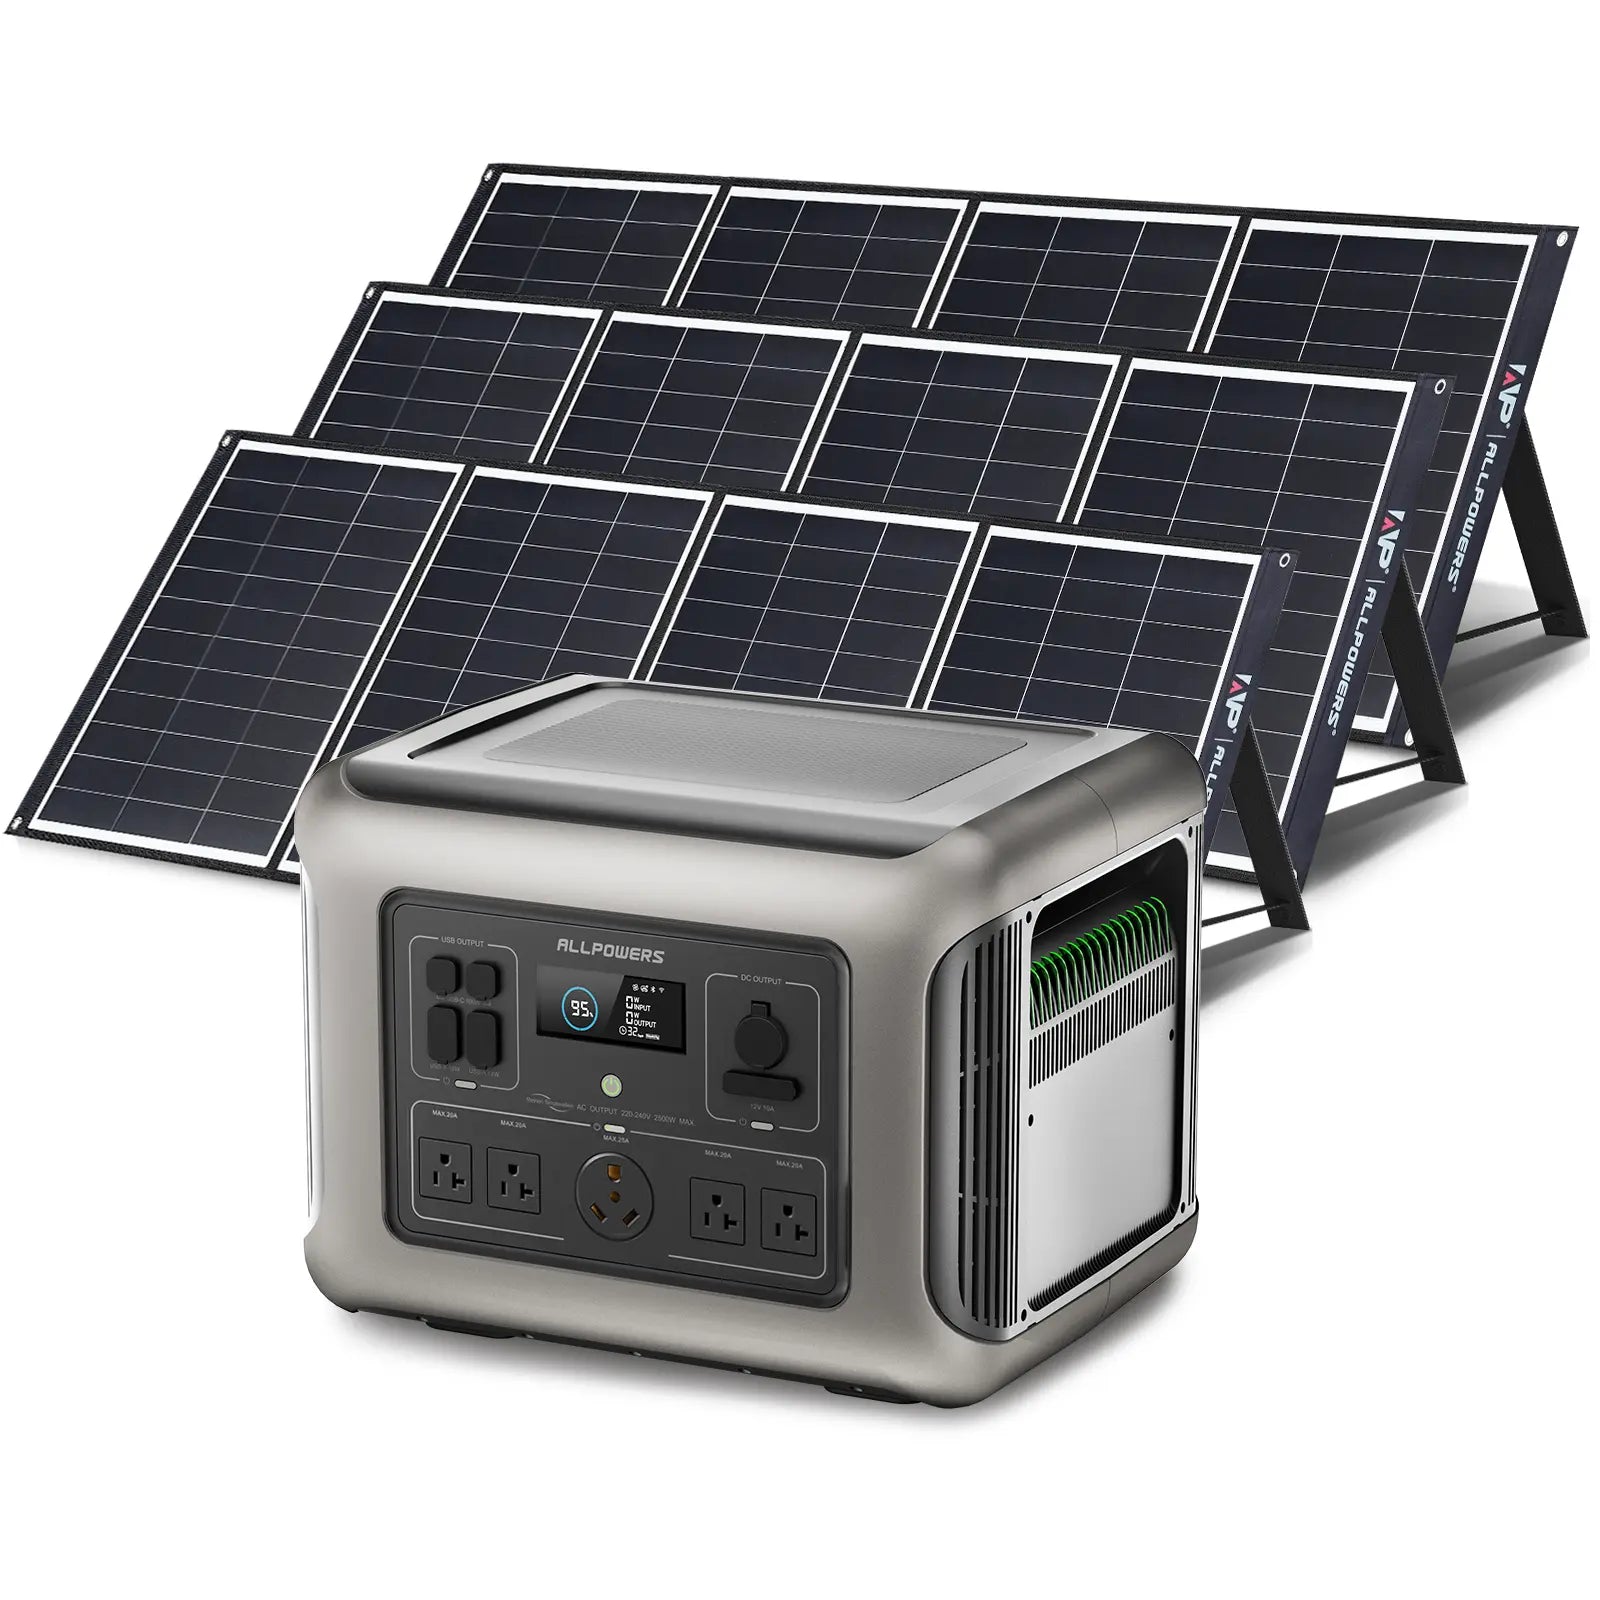 ALLPOWERS Solar Generator Kit 2500W (R2500 + 3 x SP035 200W Solar Panel)